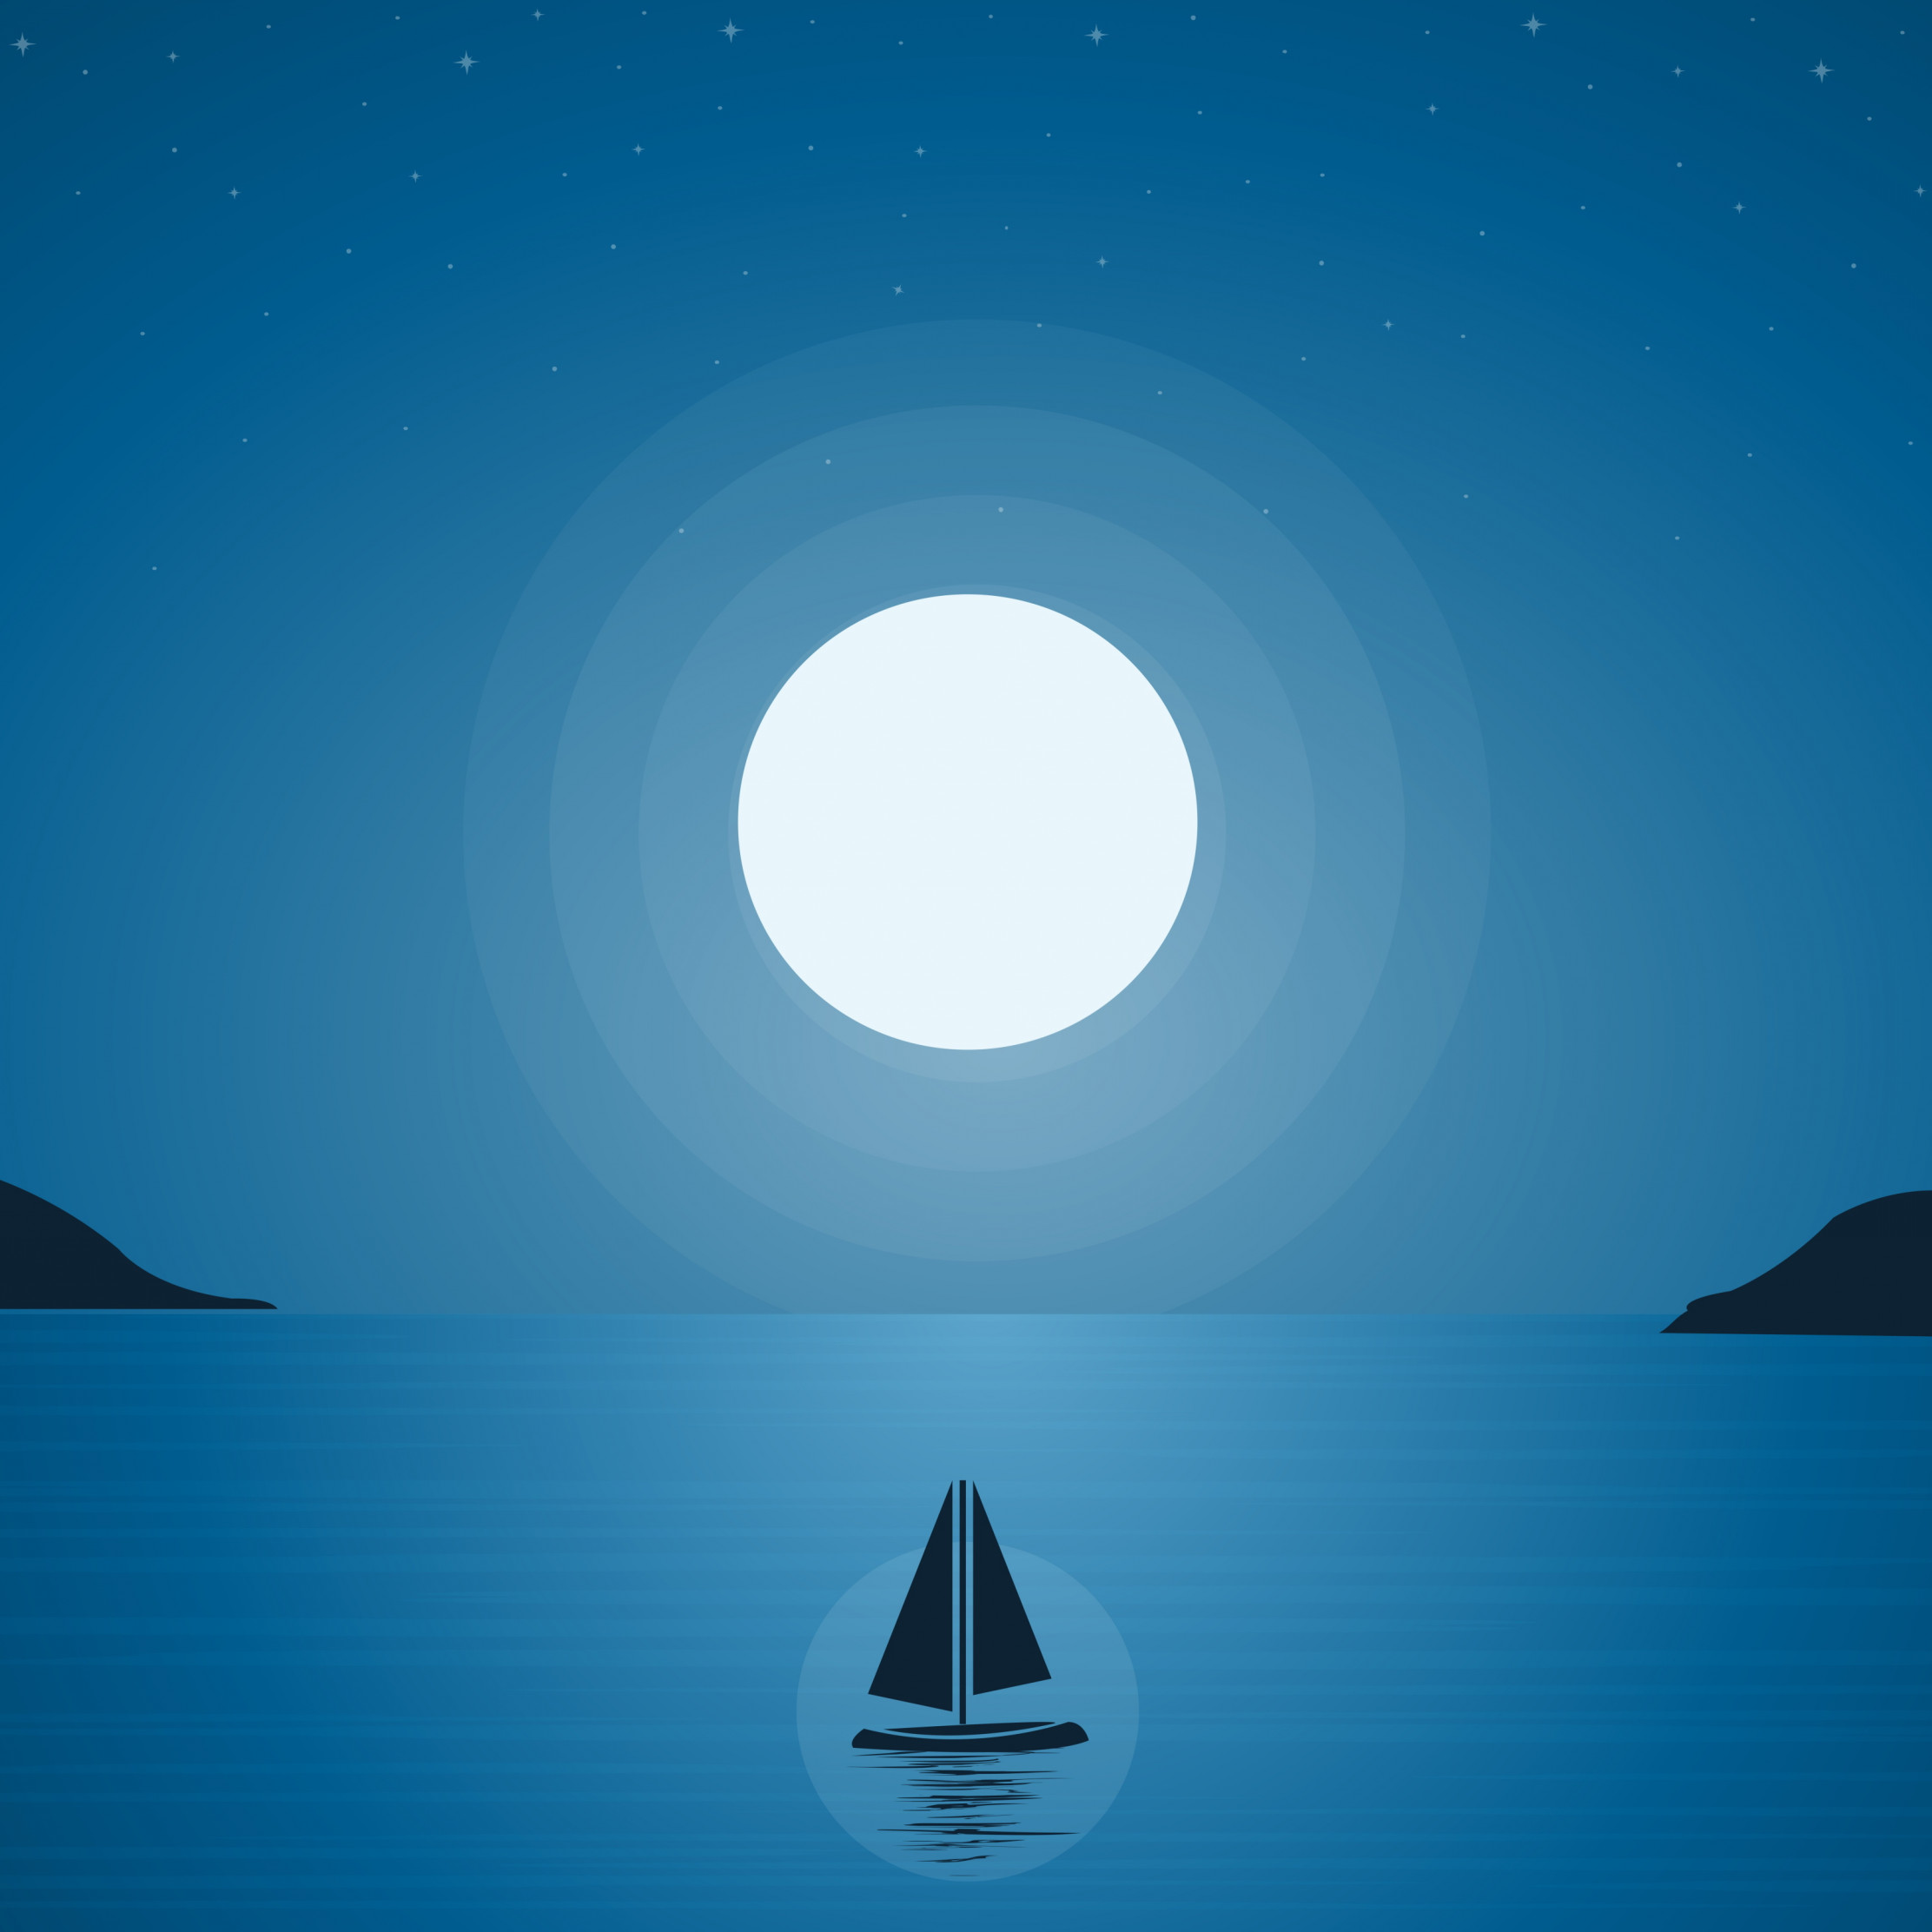 Boat trip under the moonlight wallpaper 2224x2224